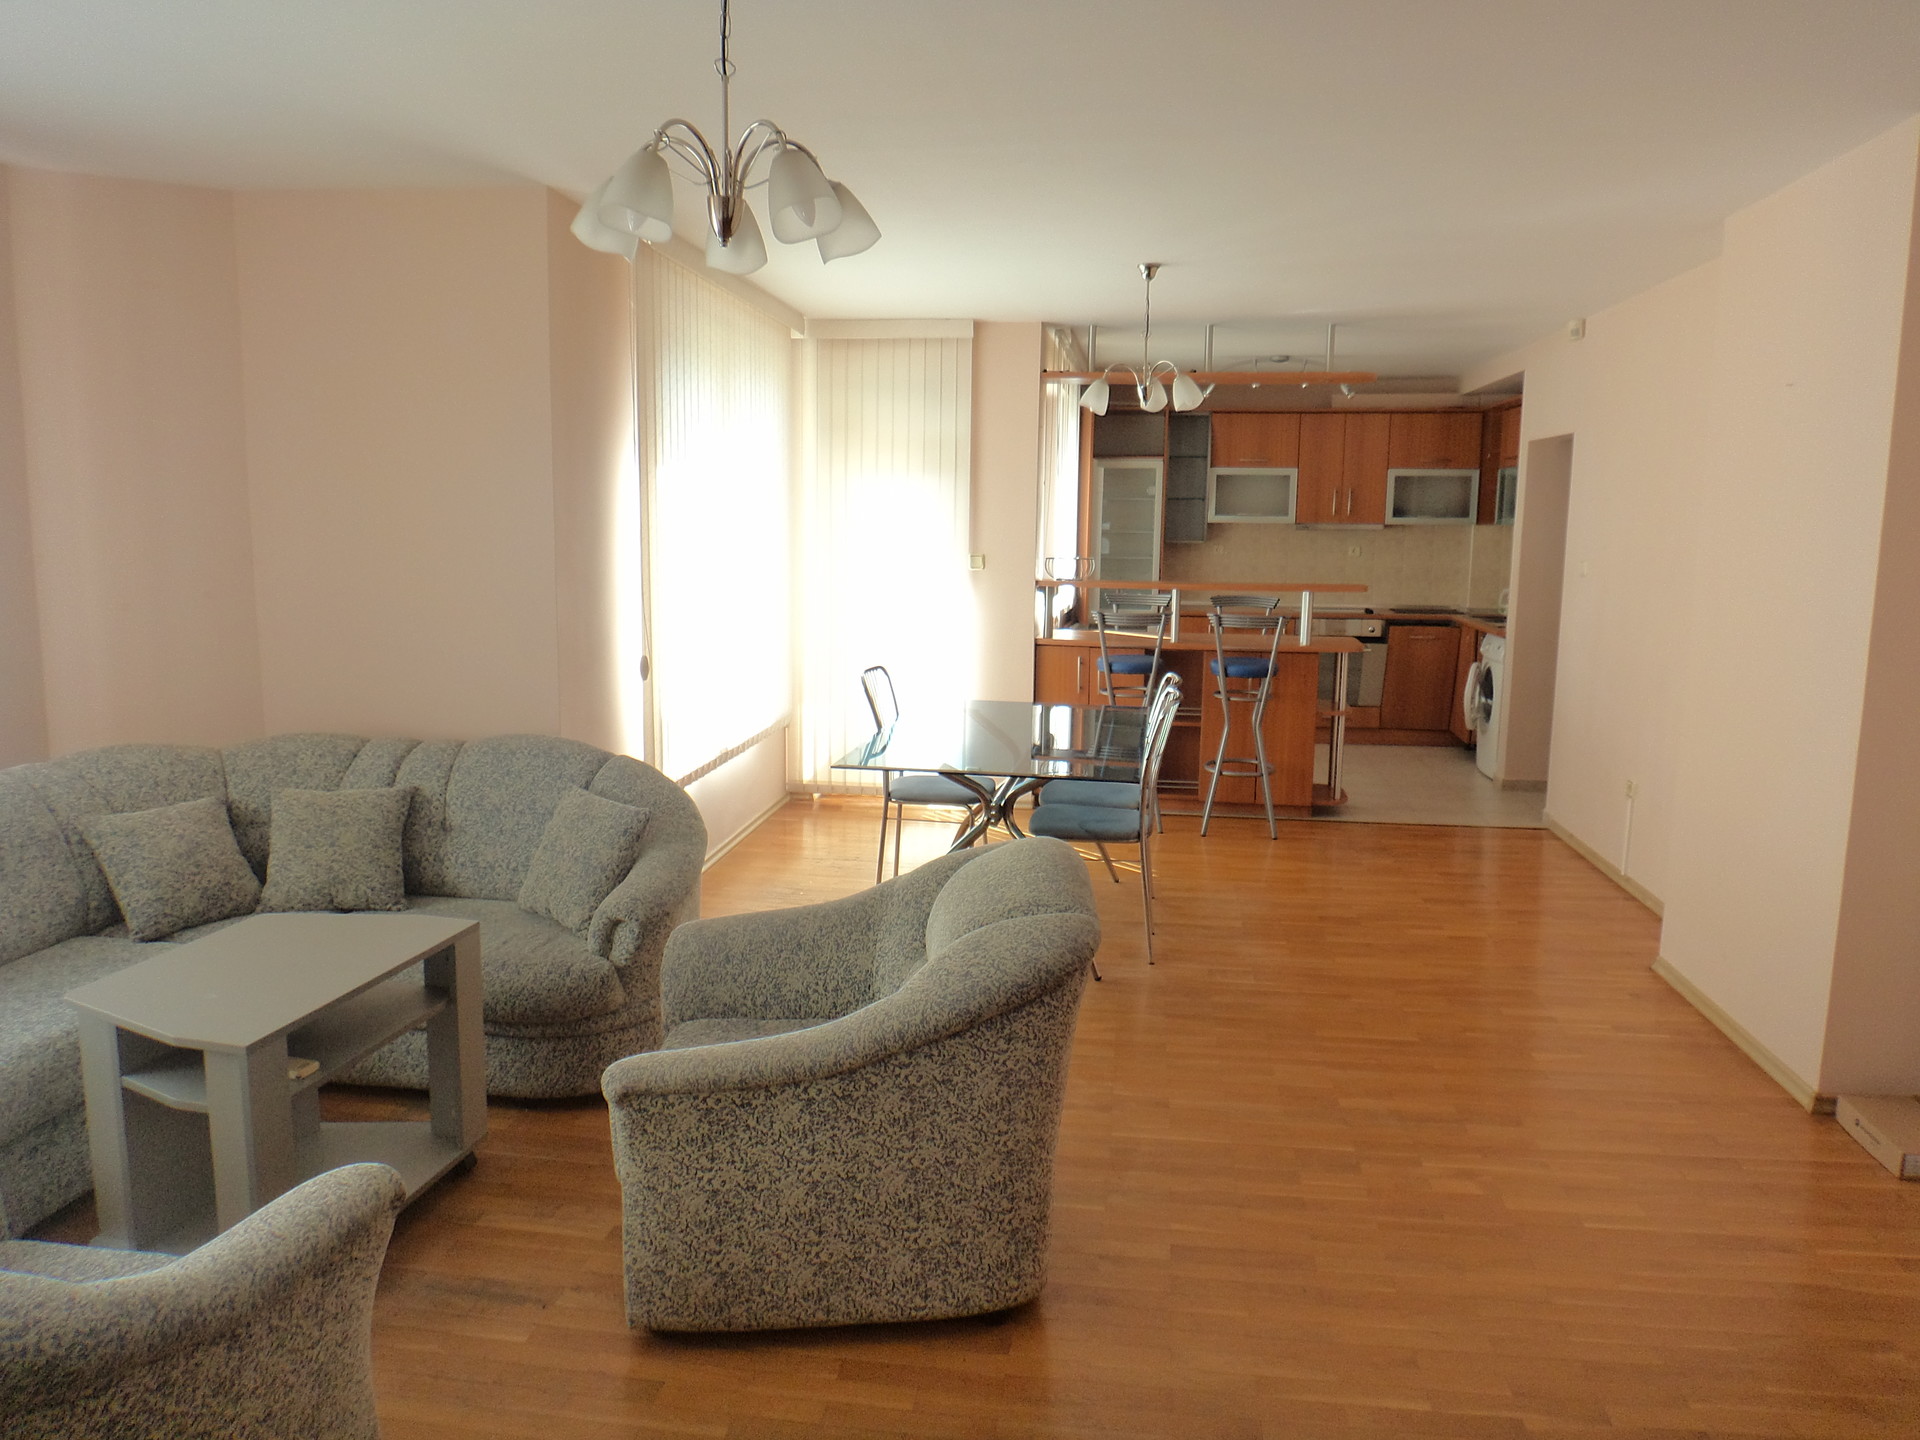 Large 3 bedrroms apartment in teh center of Varna | Flat rent Varna